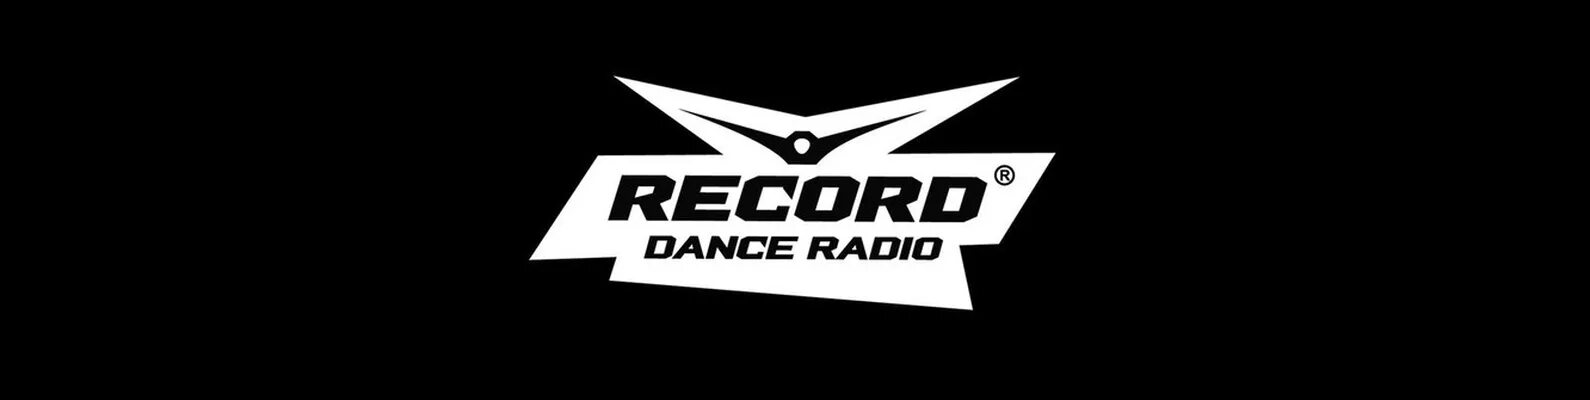 Слушать топ радио рекорд. Радио рекорд. Radio record logo. Record Dance Radio. Логотипы радиостанций рекорд.